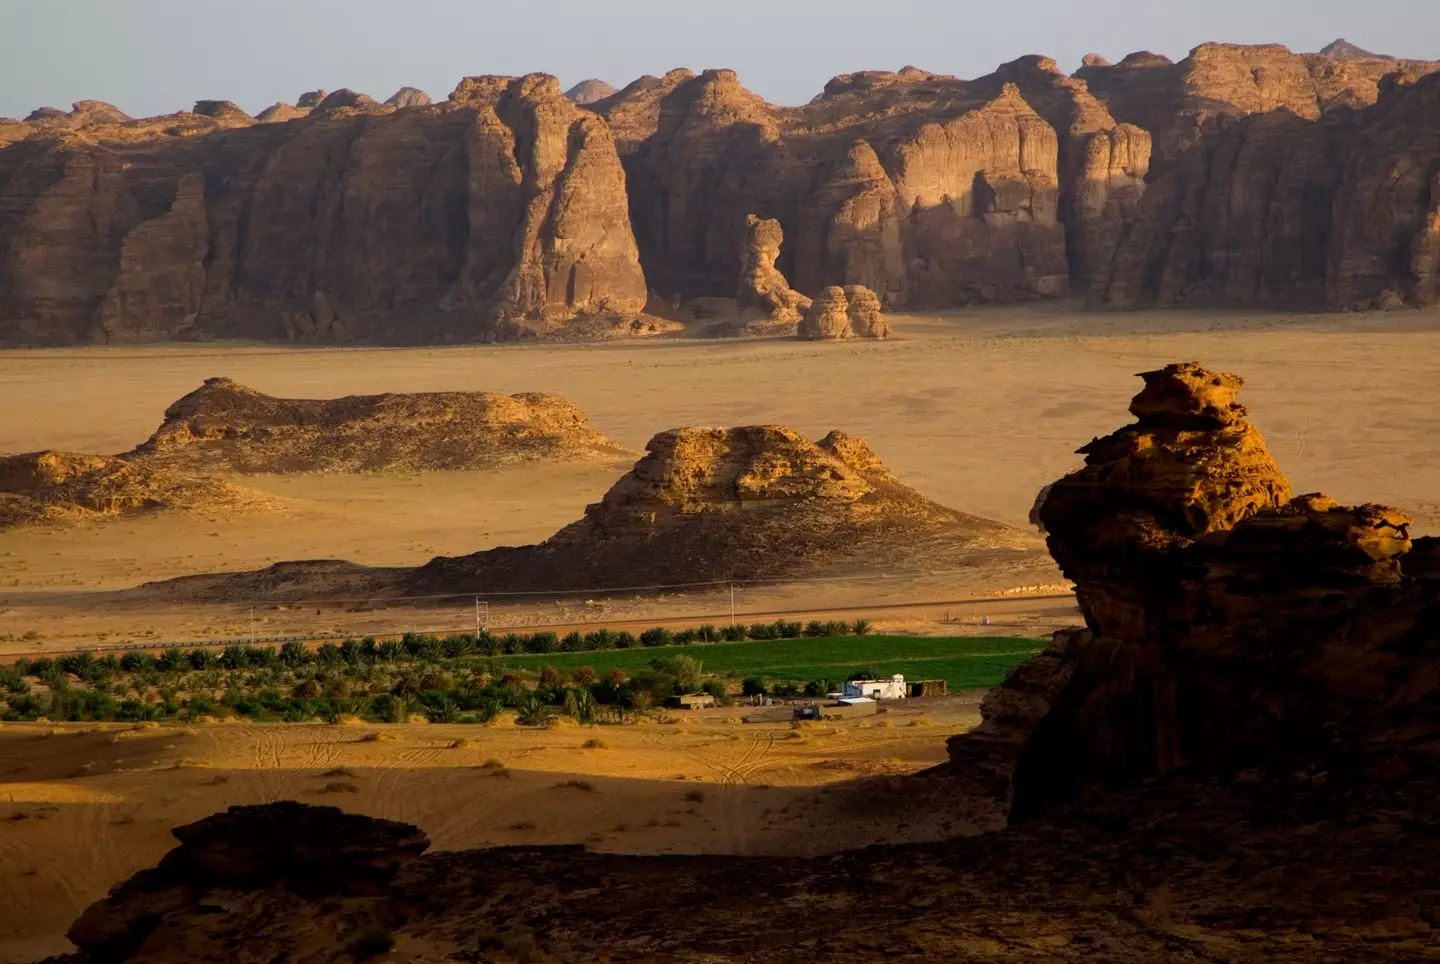 The stone is located in the Saudi Arabian desert.